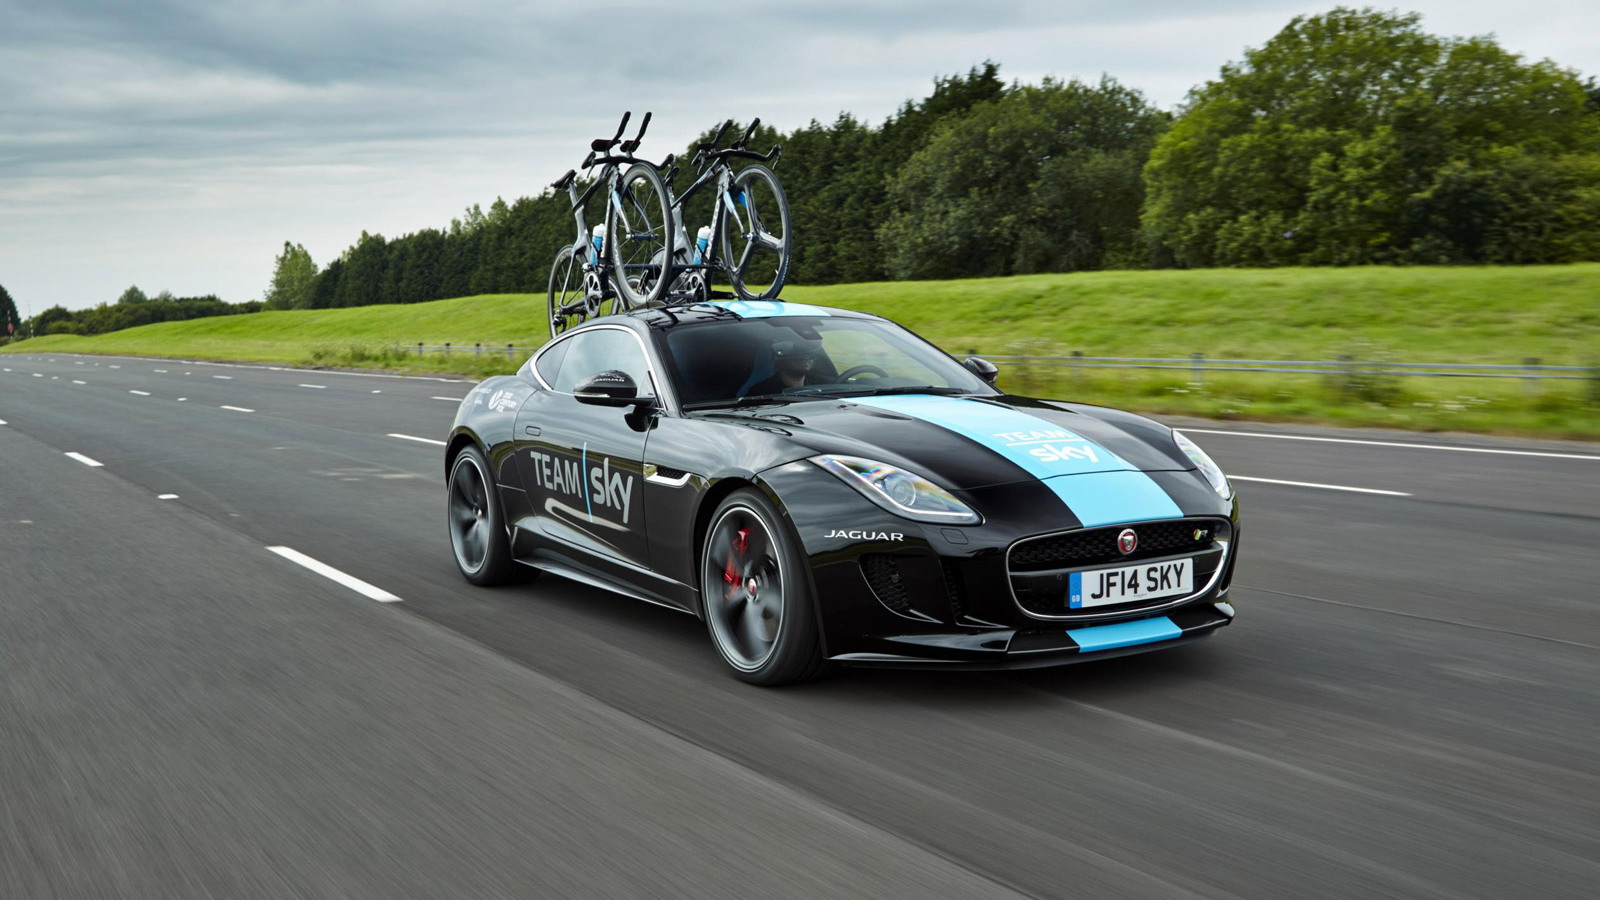 Jaguar F-Type built by SVO for Team Sky Tour de France cycling team